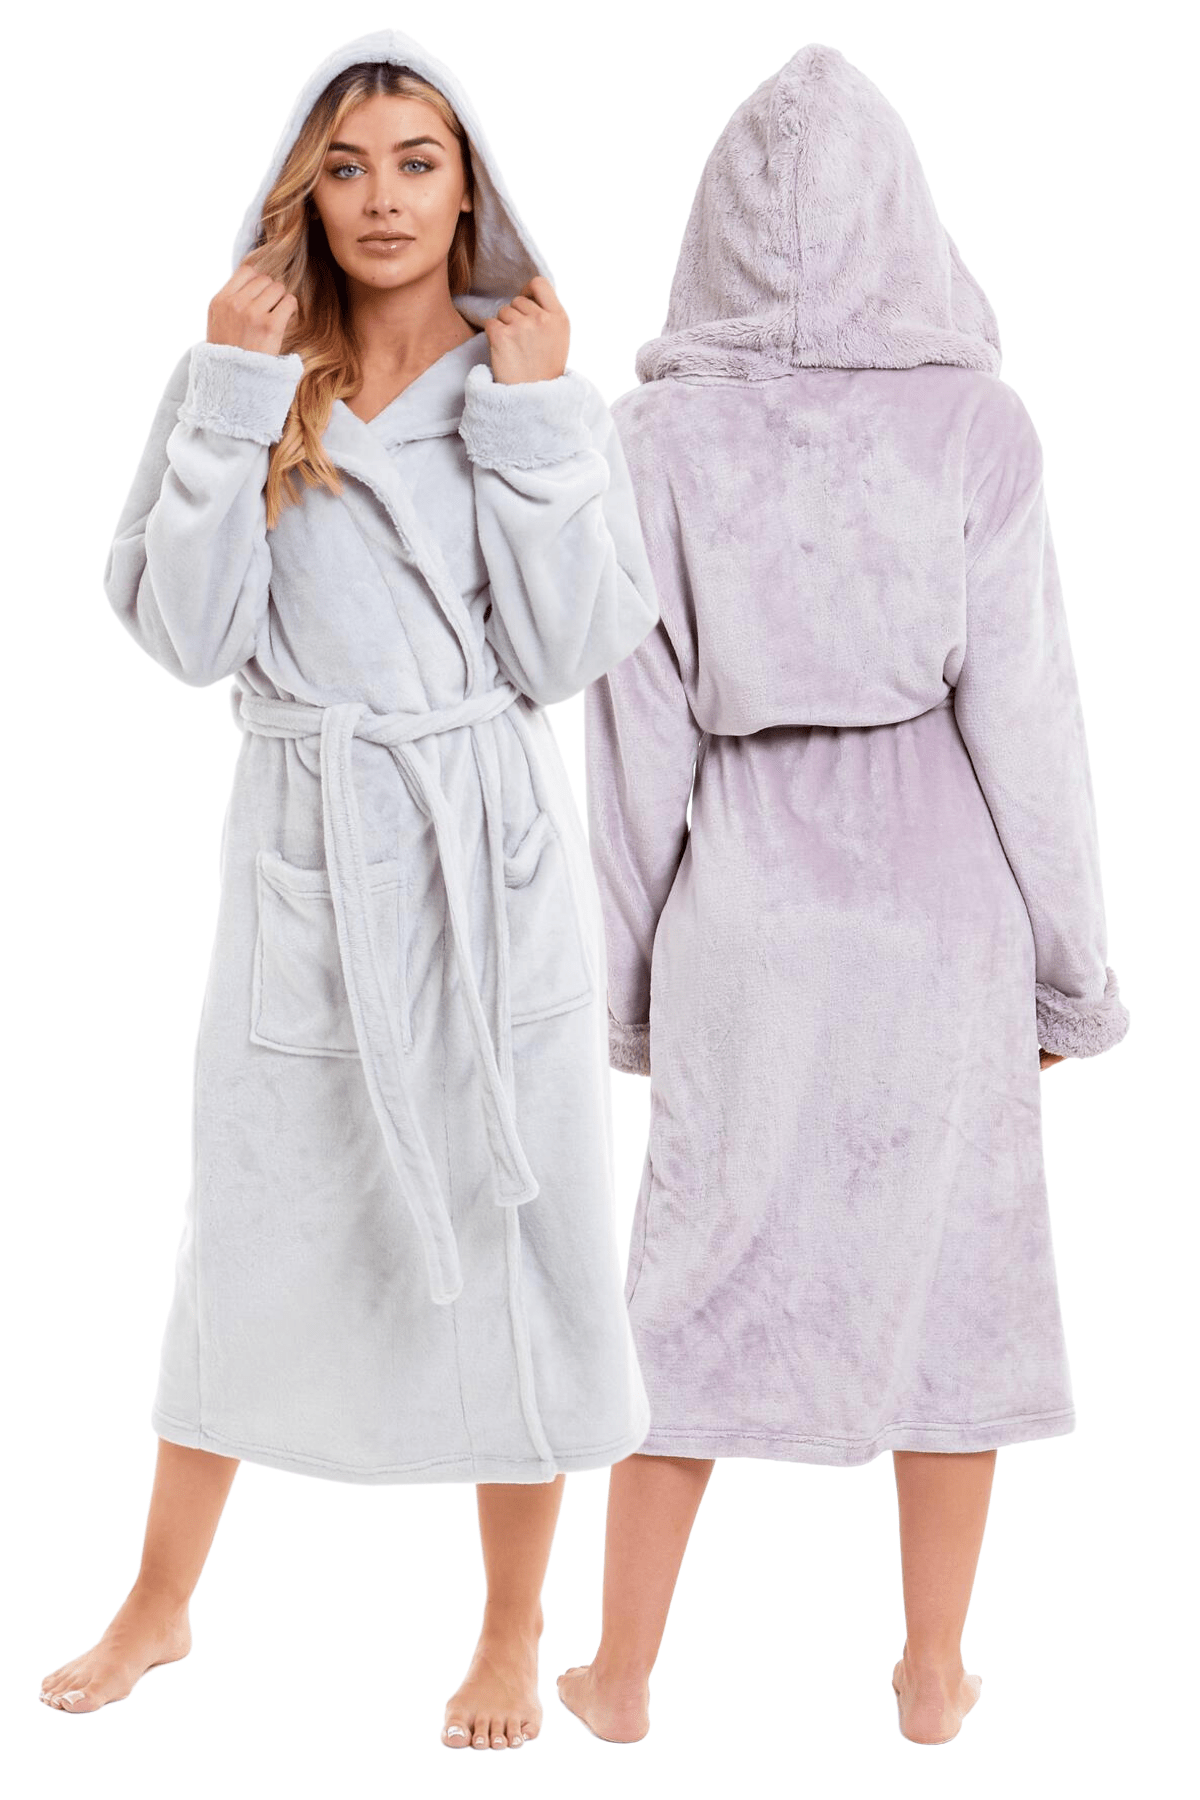 Women's Plush Fleece Hooded Robe Dressing Gown, Super Soft Bath Robe OLIVIA ROCCO Dressing Gown